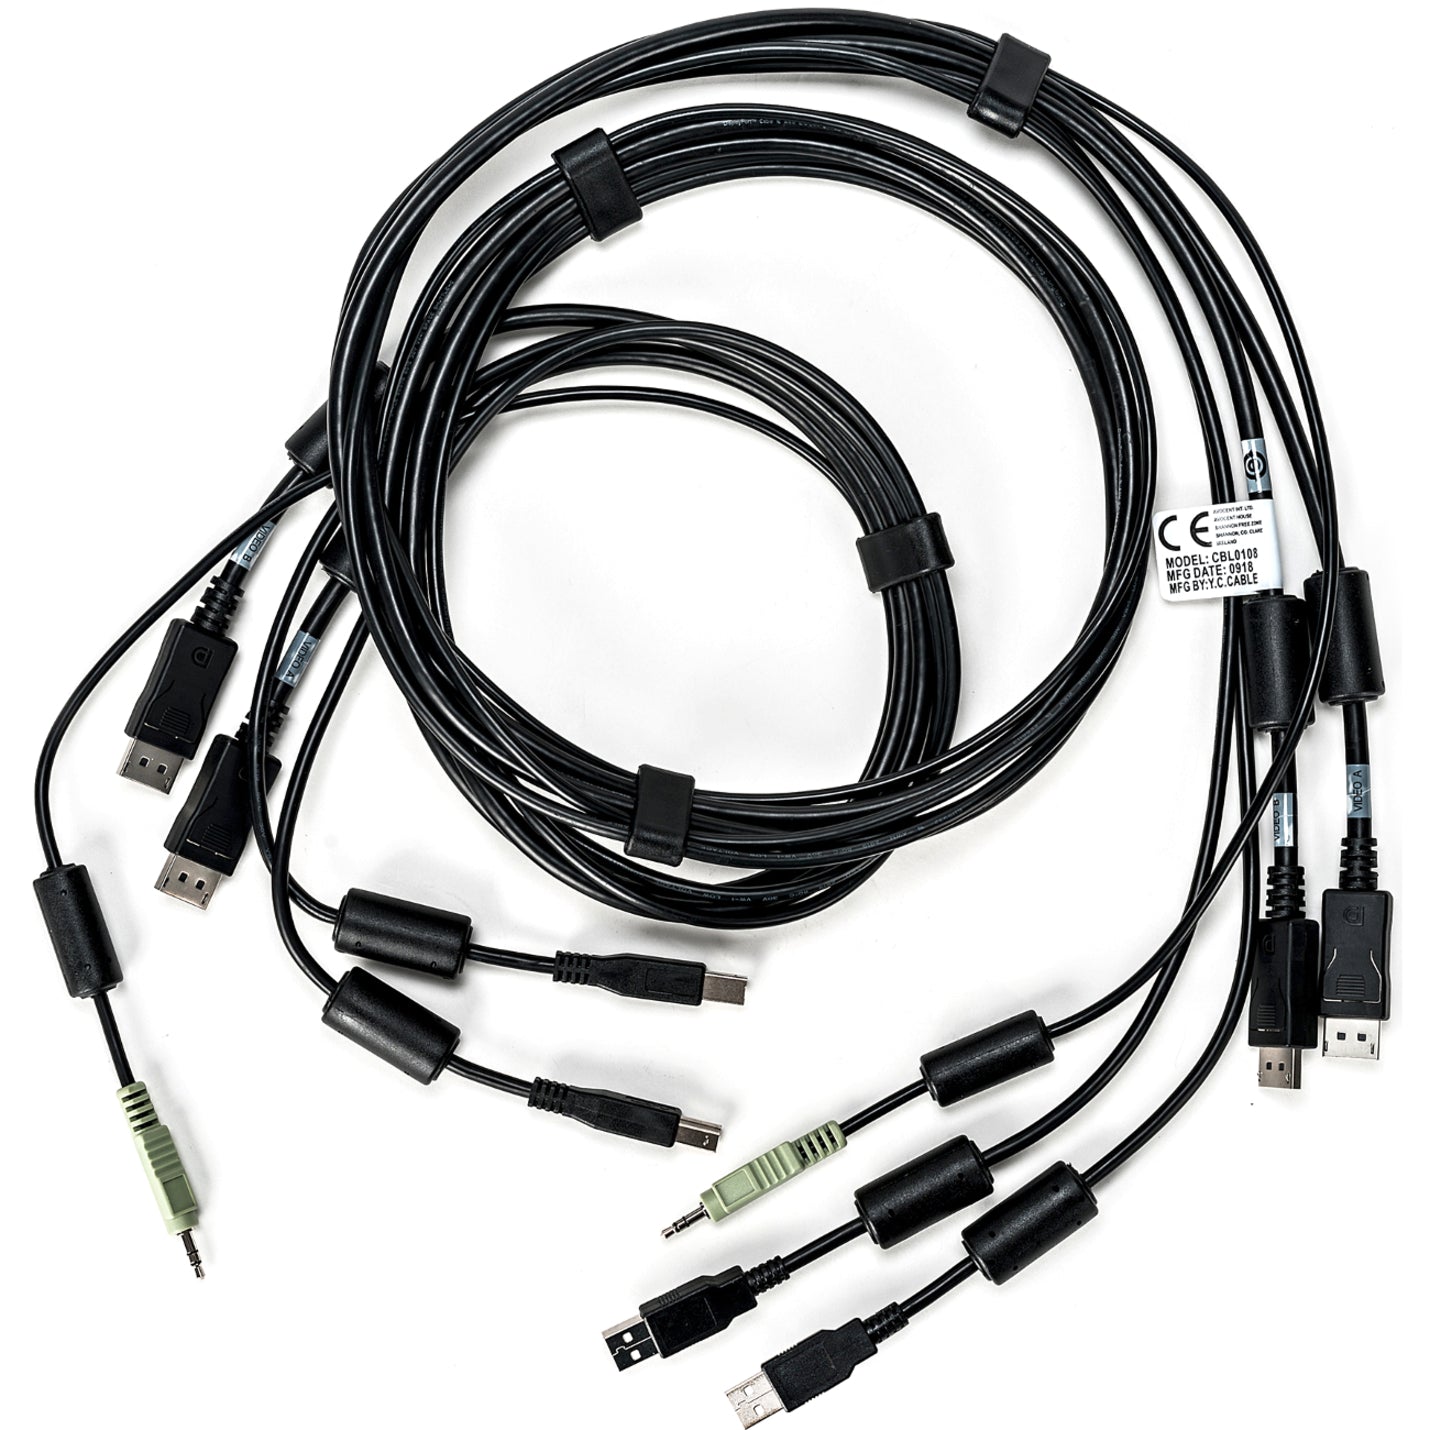 AVOCENT CBL0108 SC945D Kabel - 6ft Dual USB Tastatur und Maus Dual DisplayPort und Audio Kabel